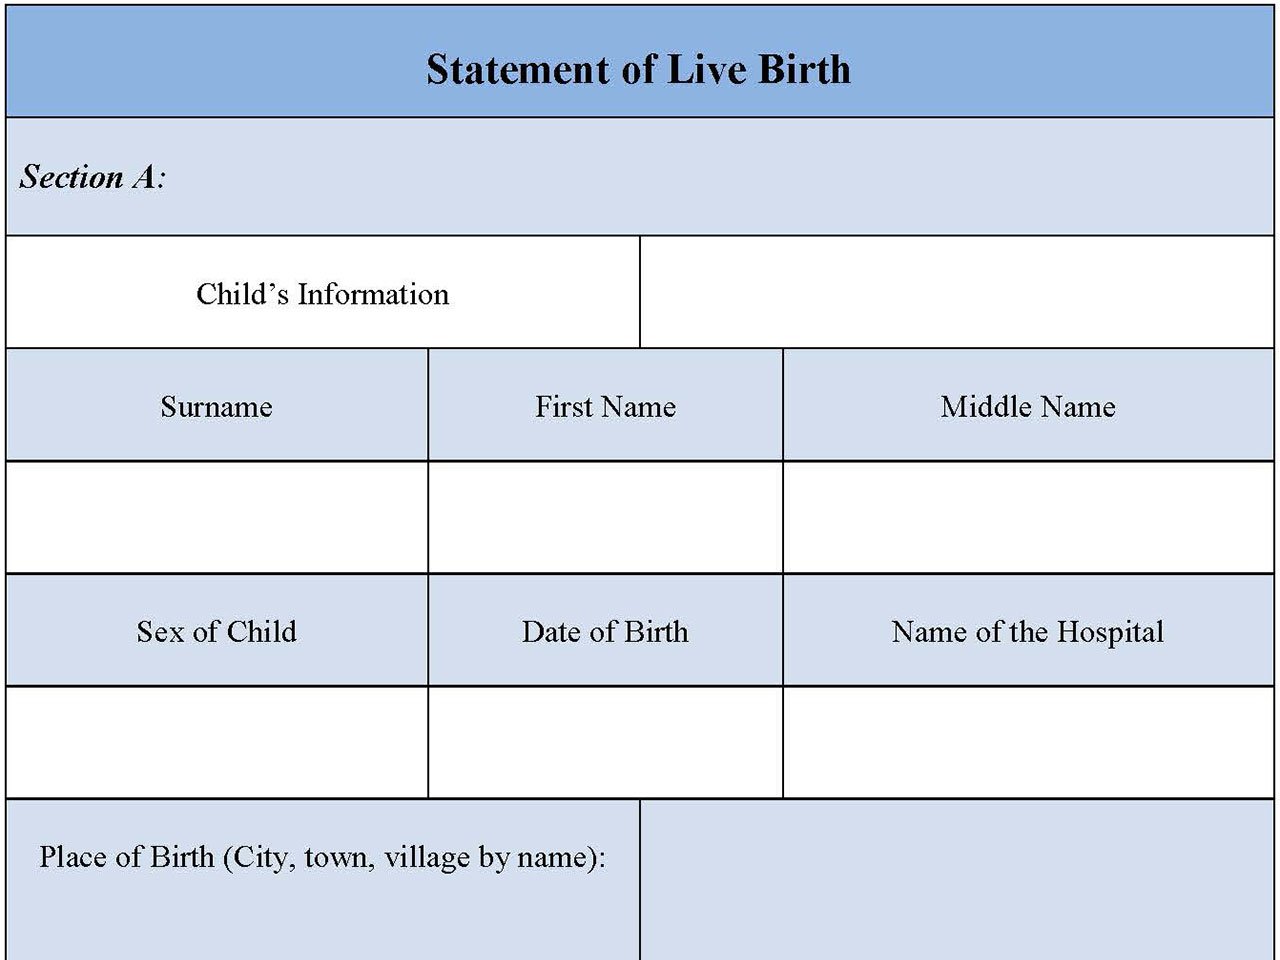 Statement of Live Birth Form